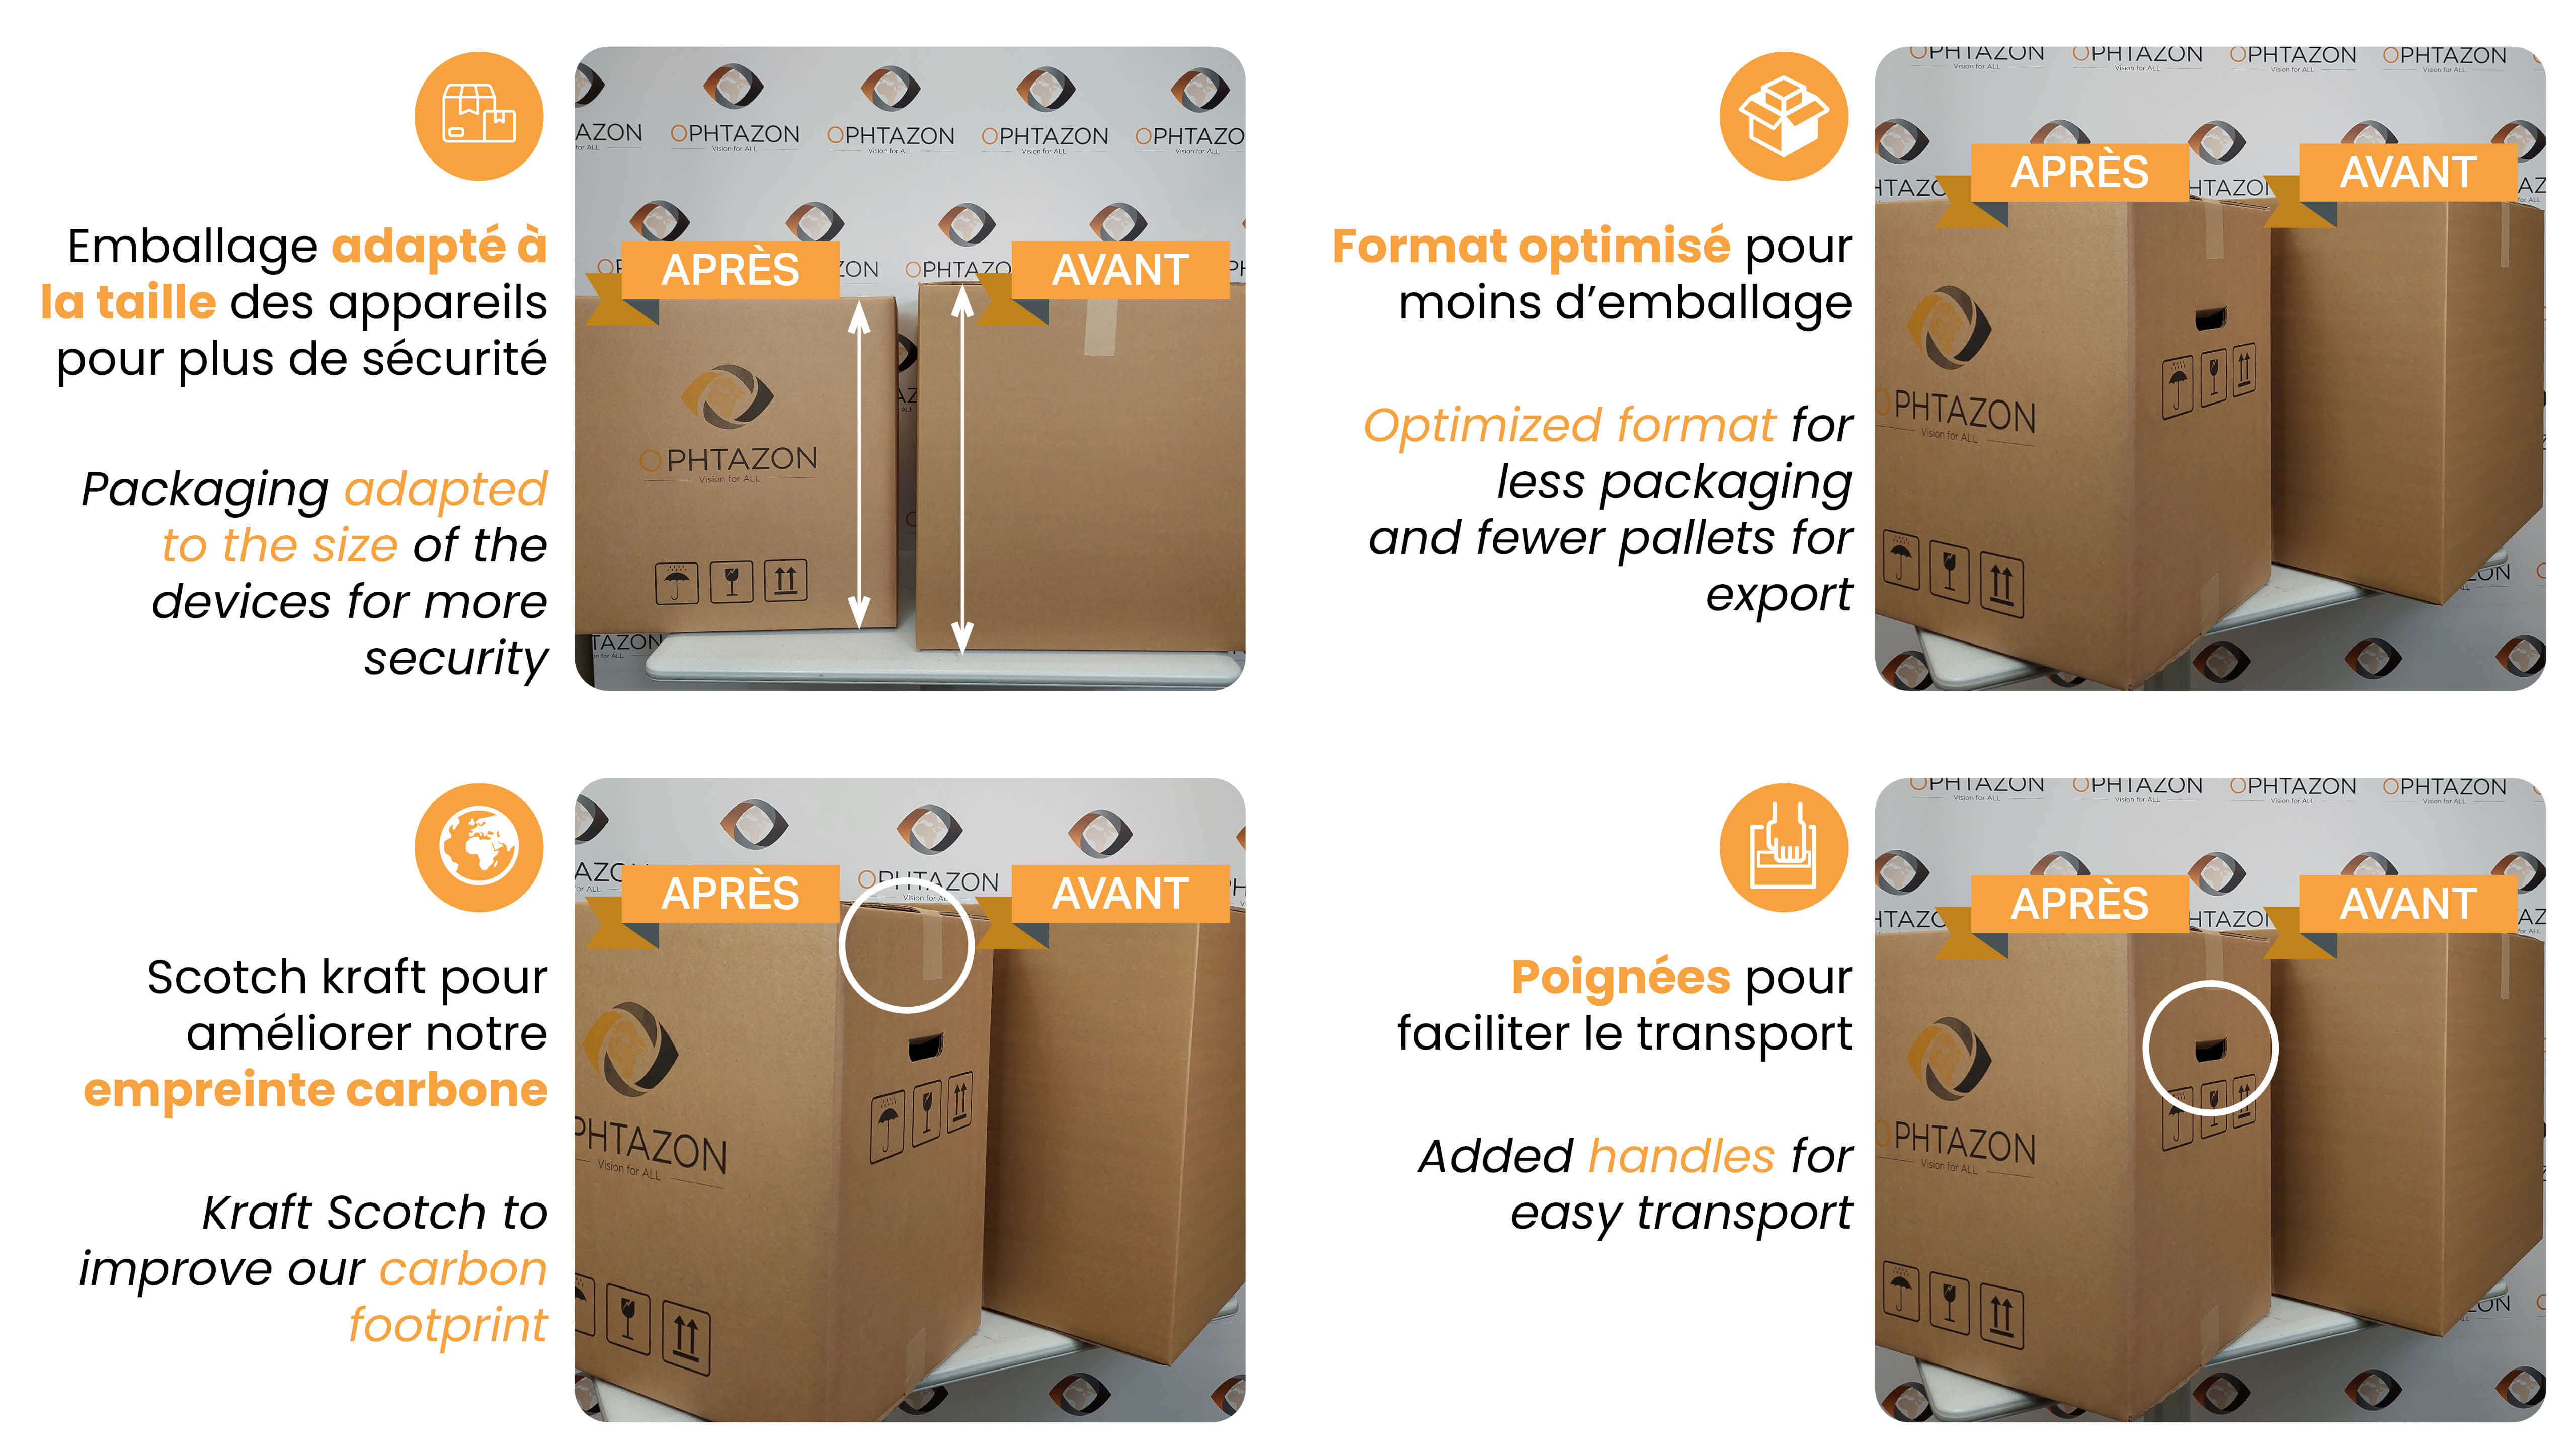 Évolution du packaging OPHTAZON